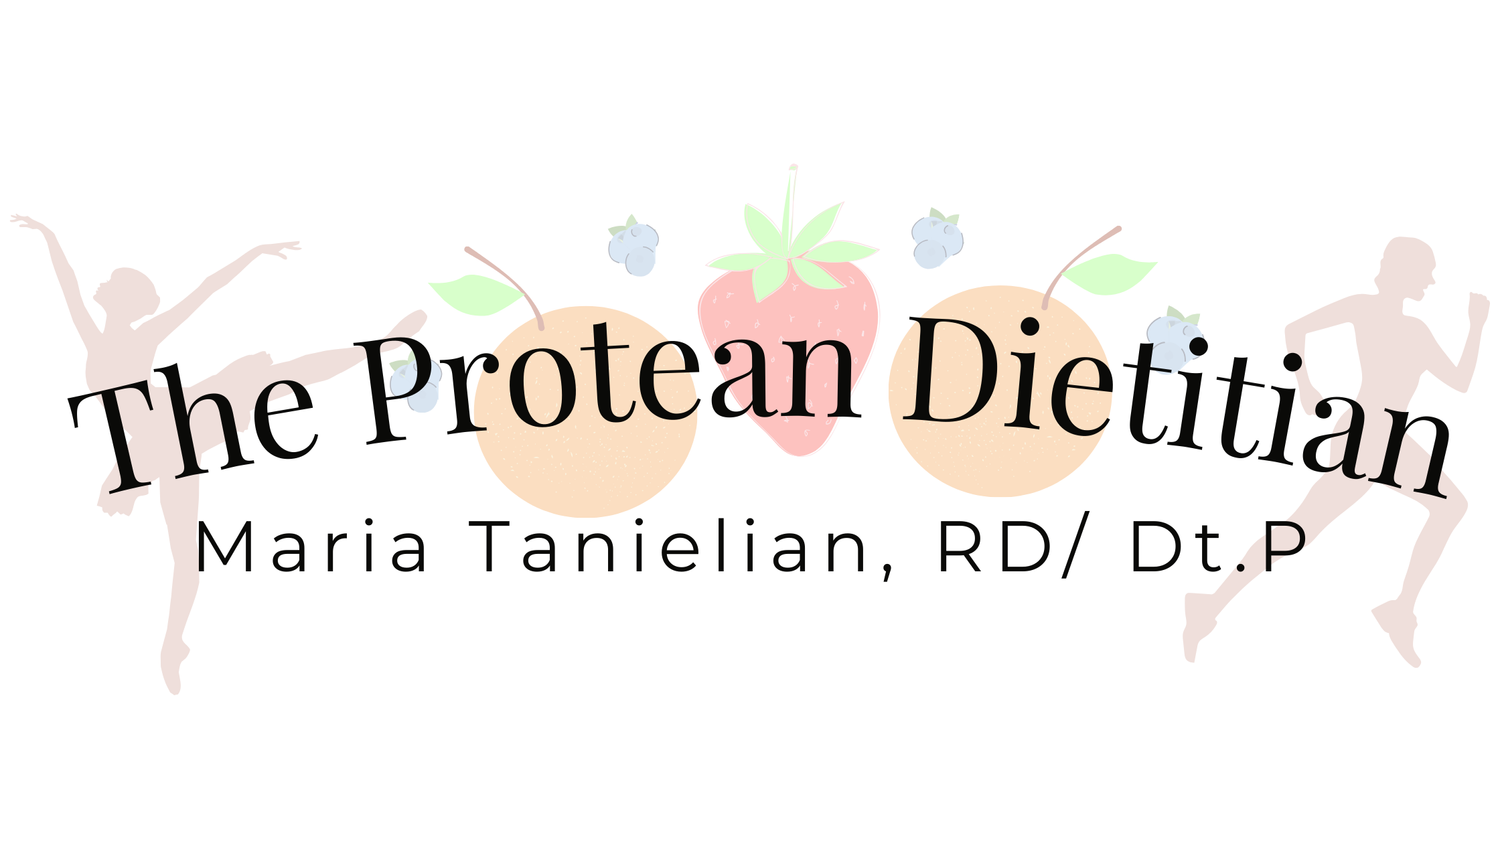 Maria Tanielian RD/Dt.P - The Protean Dietitian